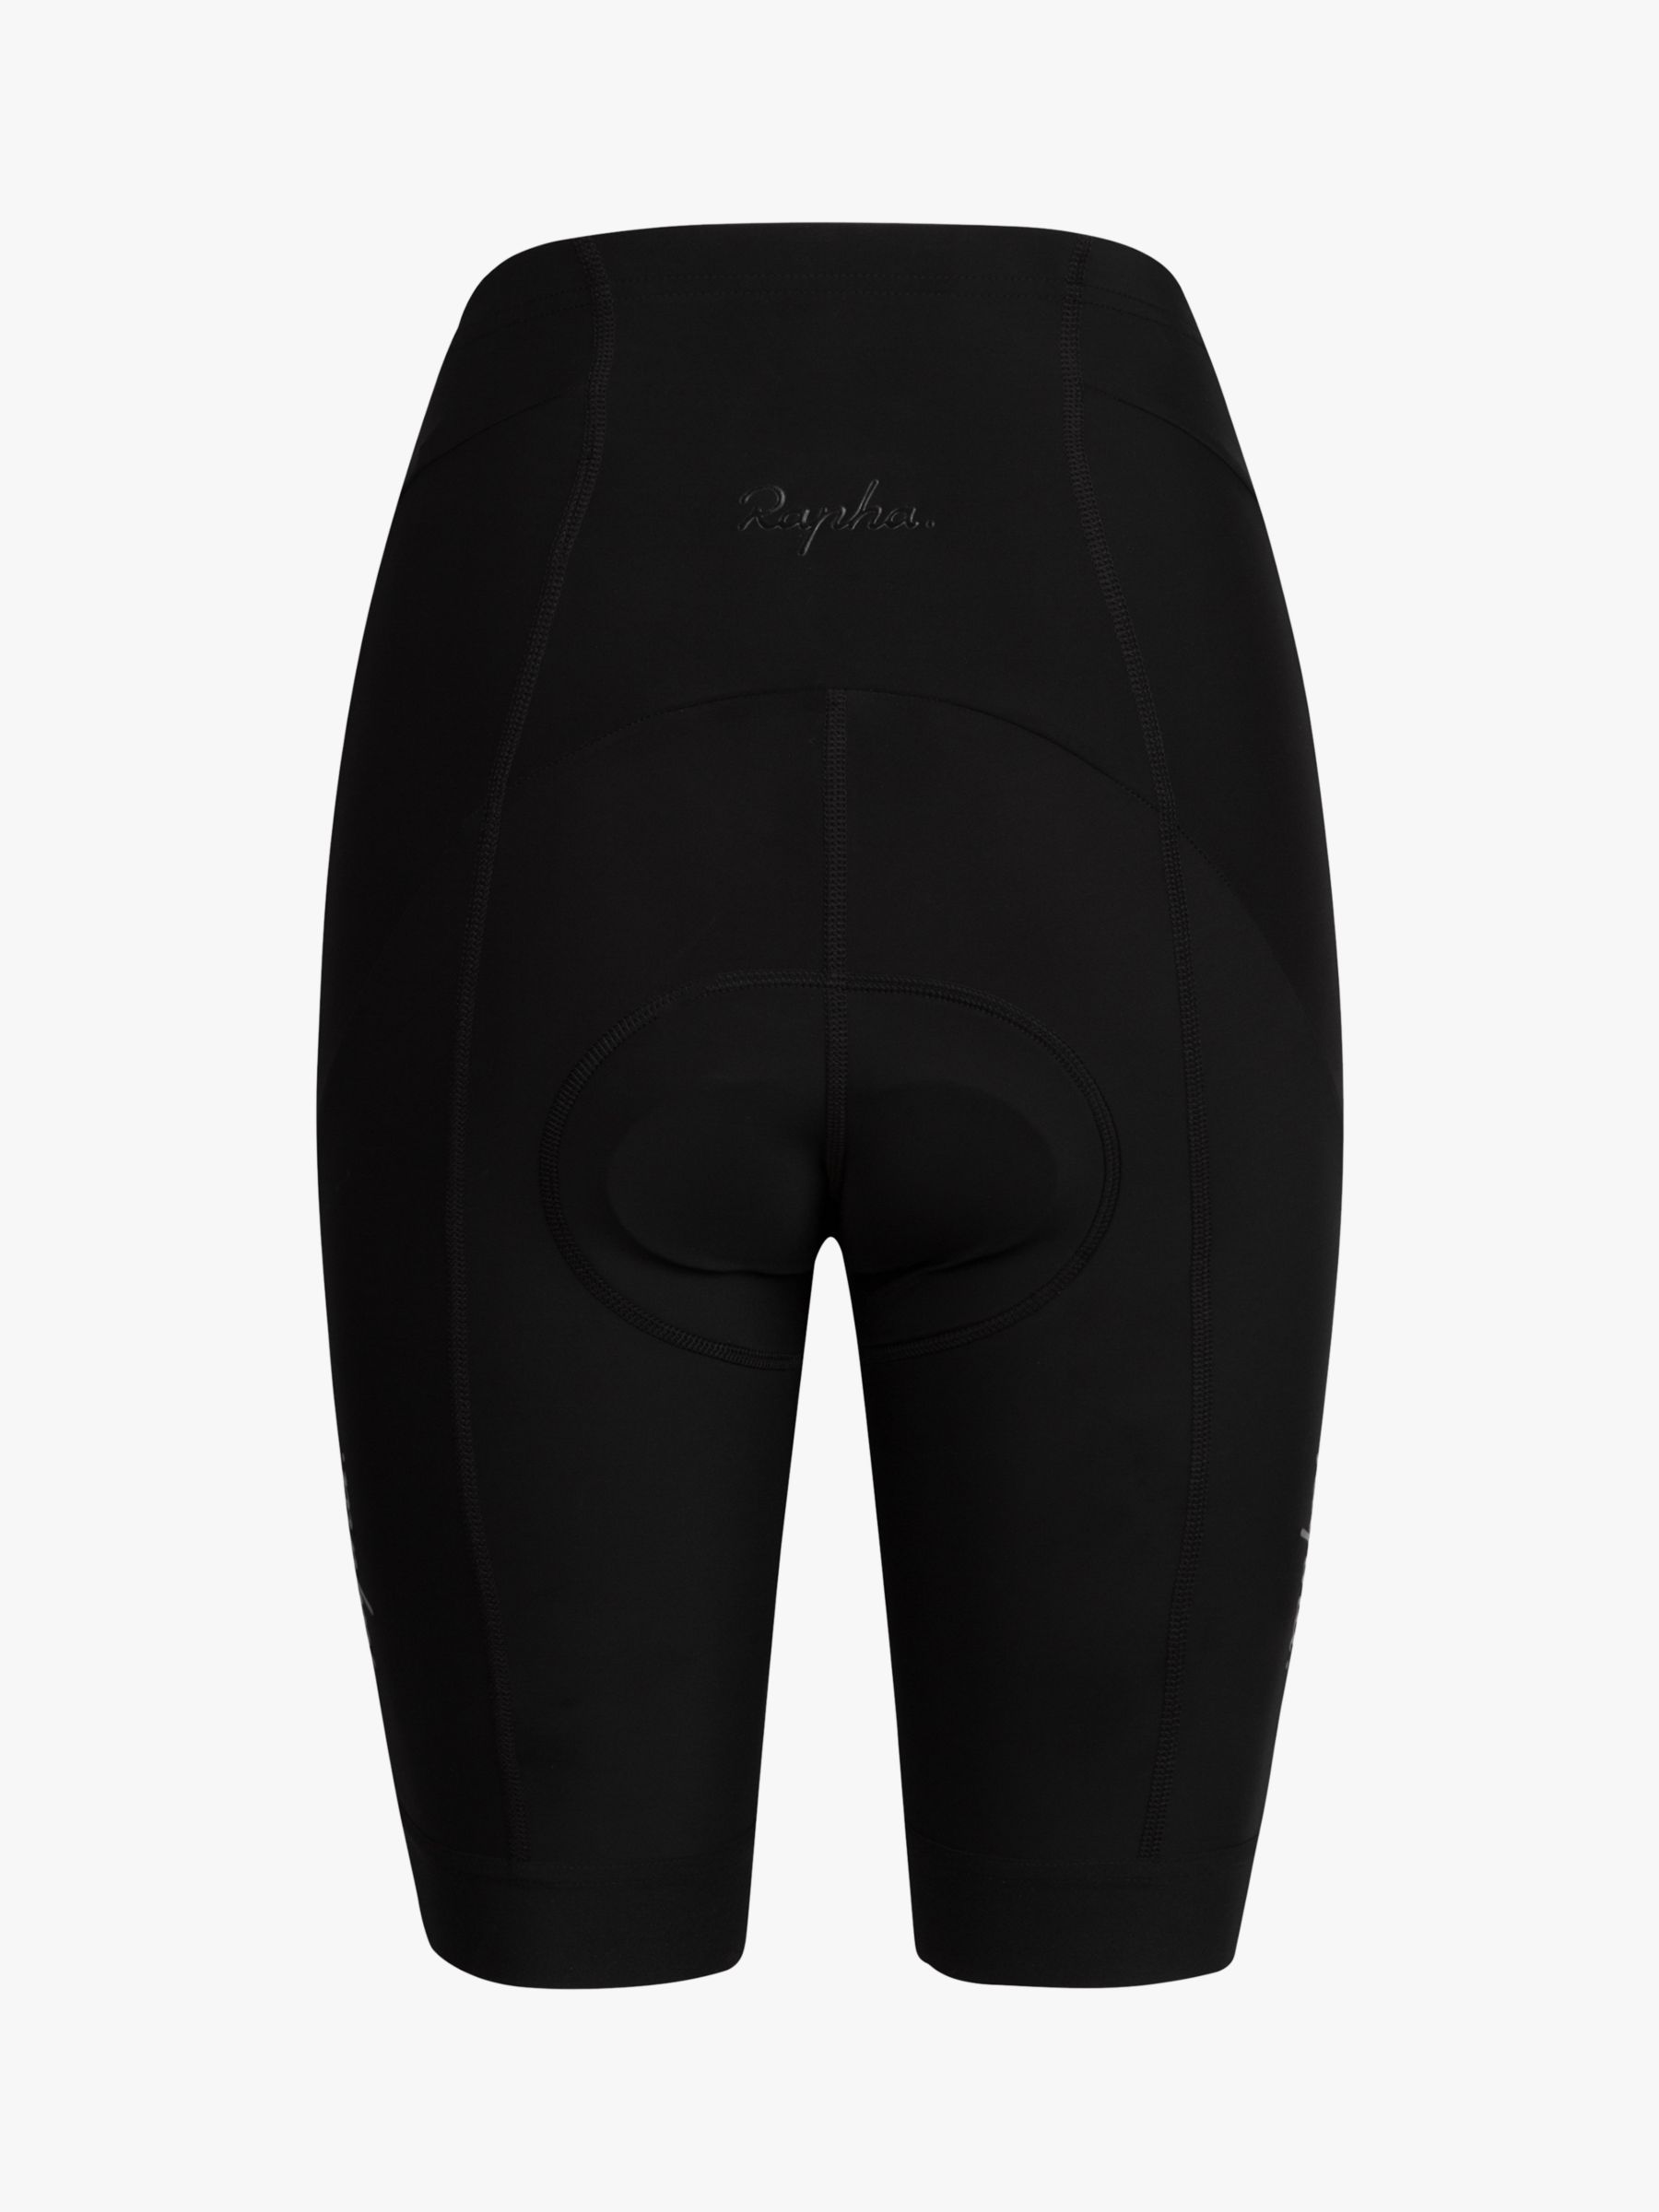 Rapha Core Cycling Shorts, Basic Black, S